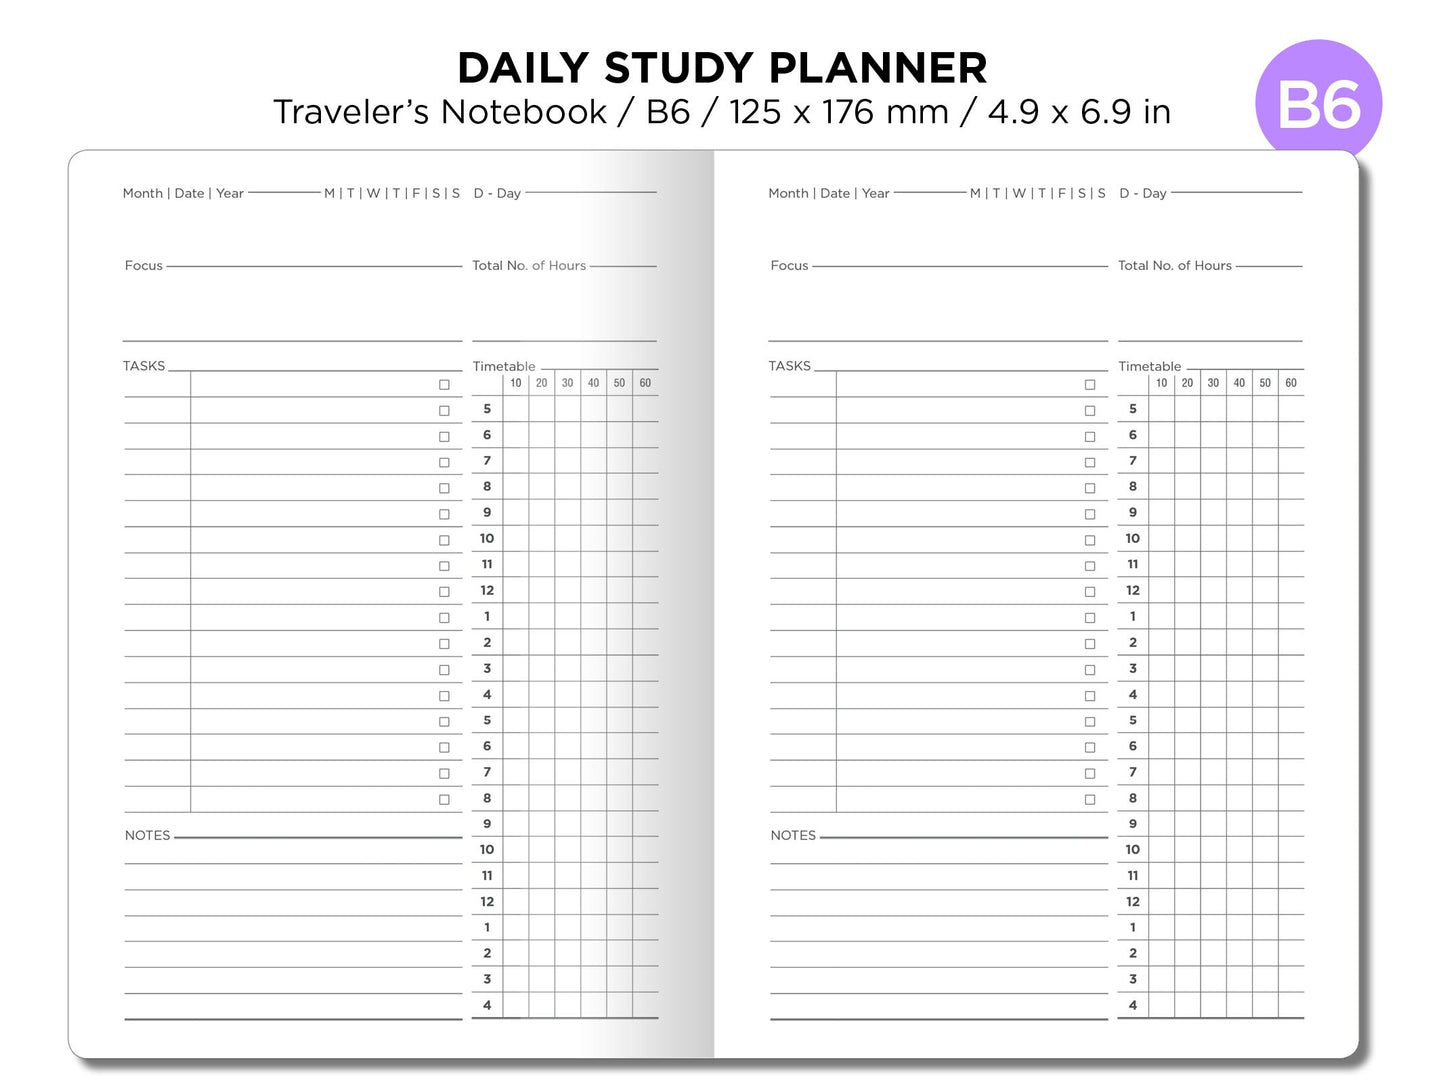 10 Minute STUDY Planner B6 TN Daily Traveler's Notebook Printable Minimalist B6050